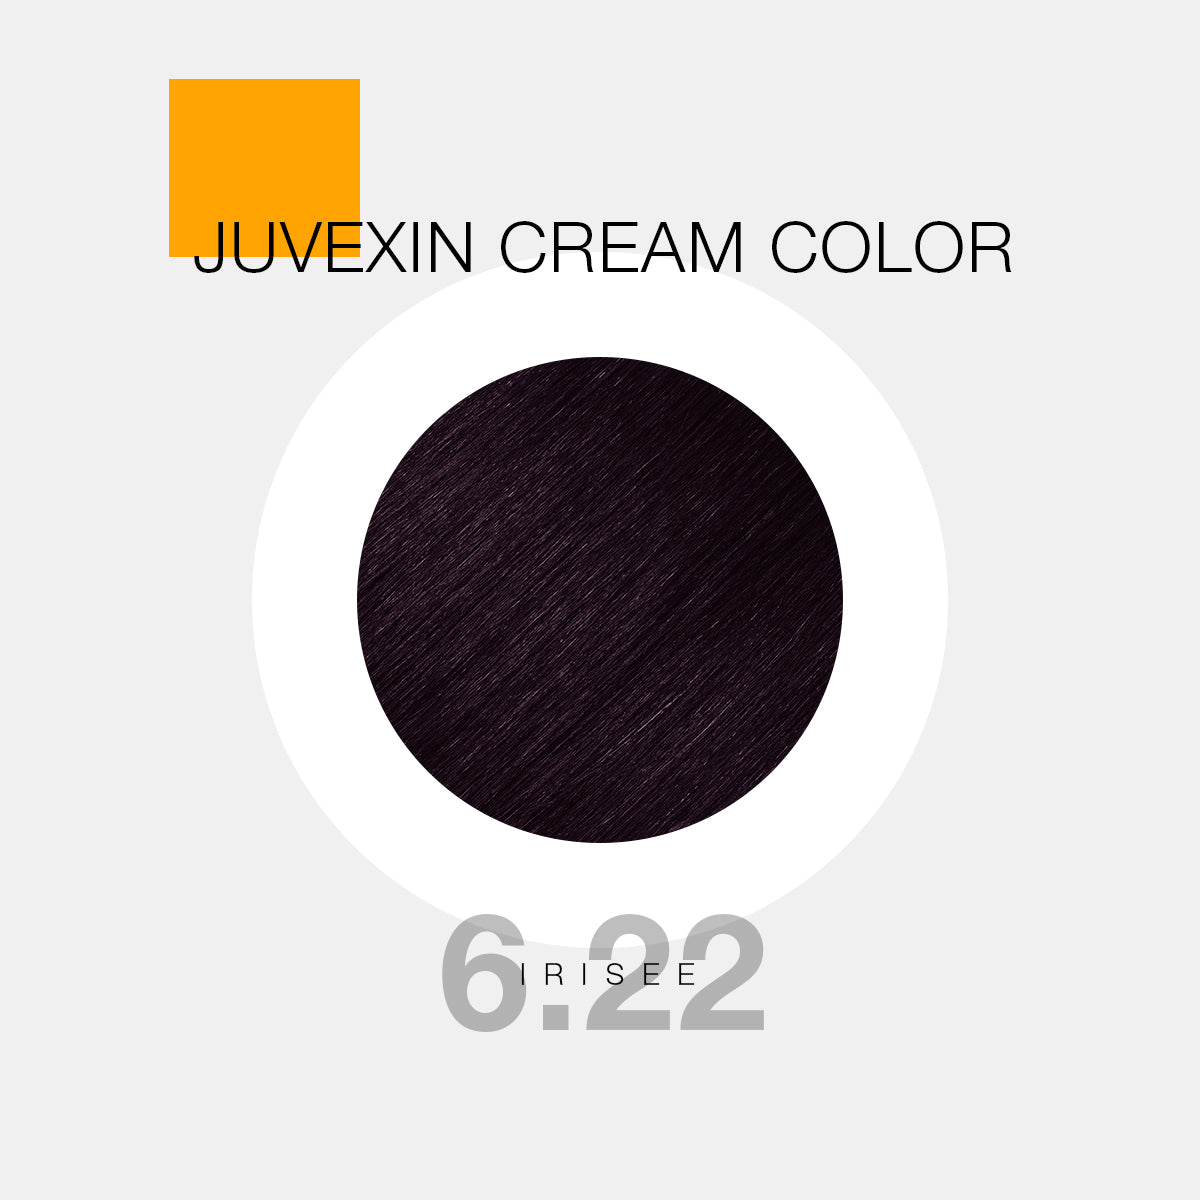 Juvexin Cream Color Pro Irisee